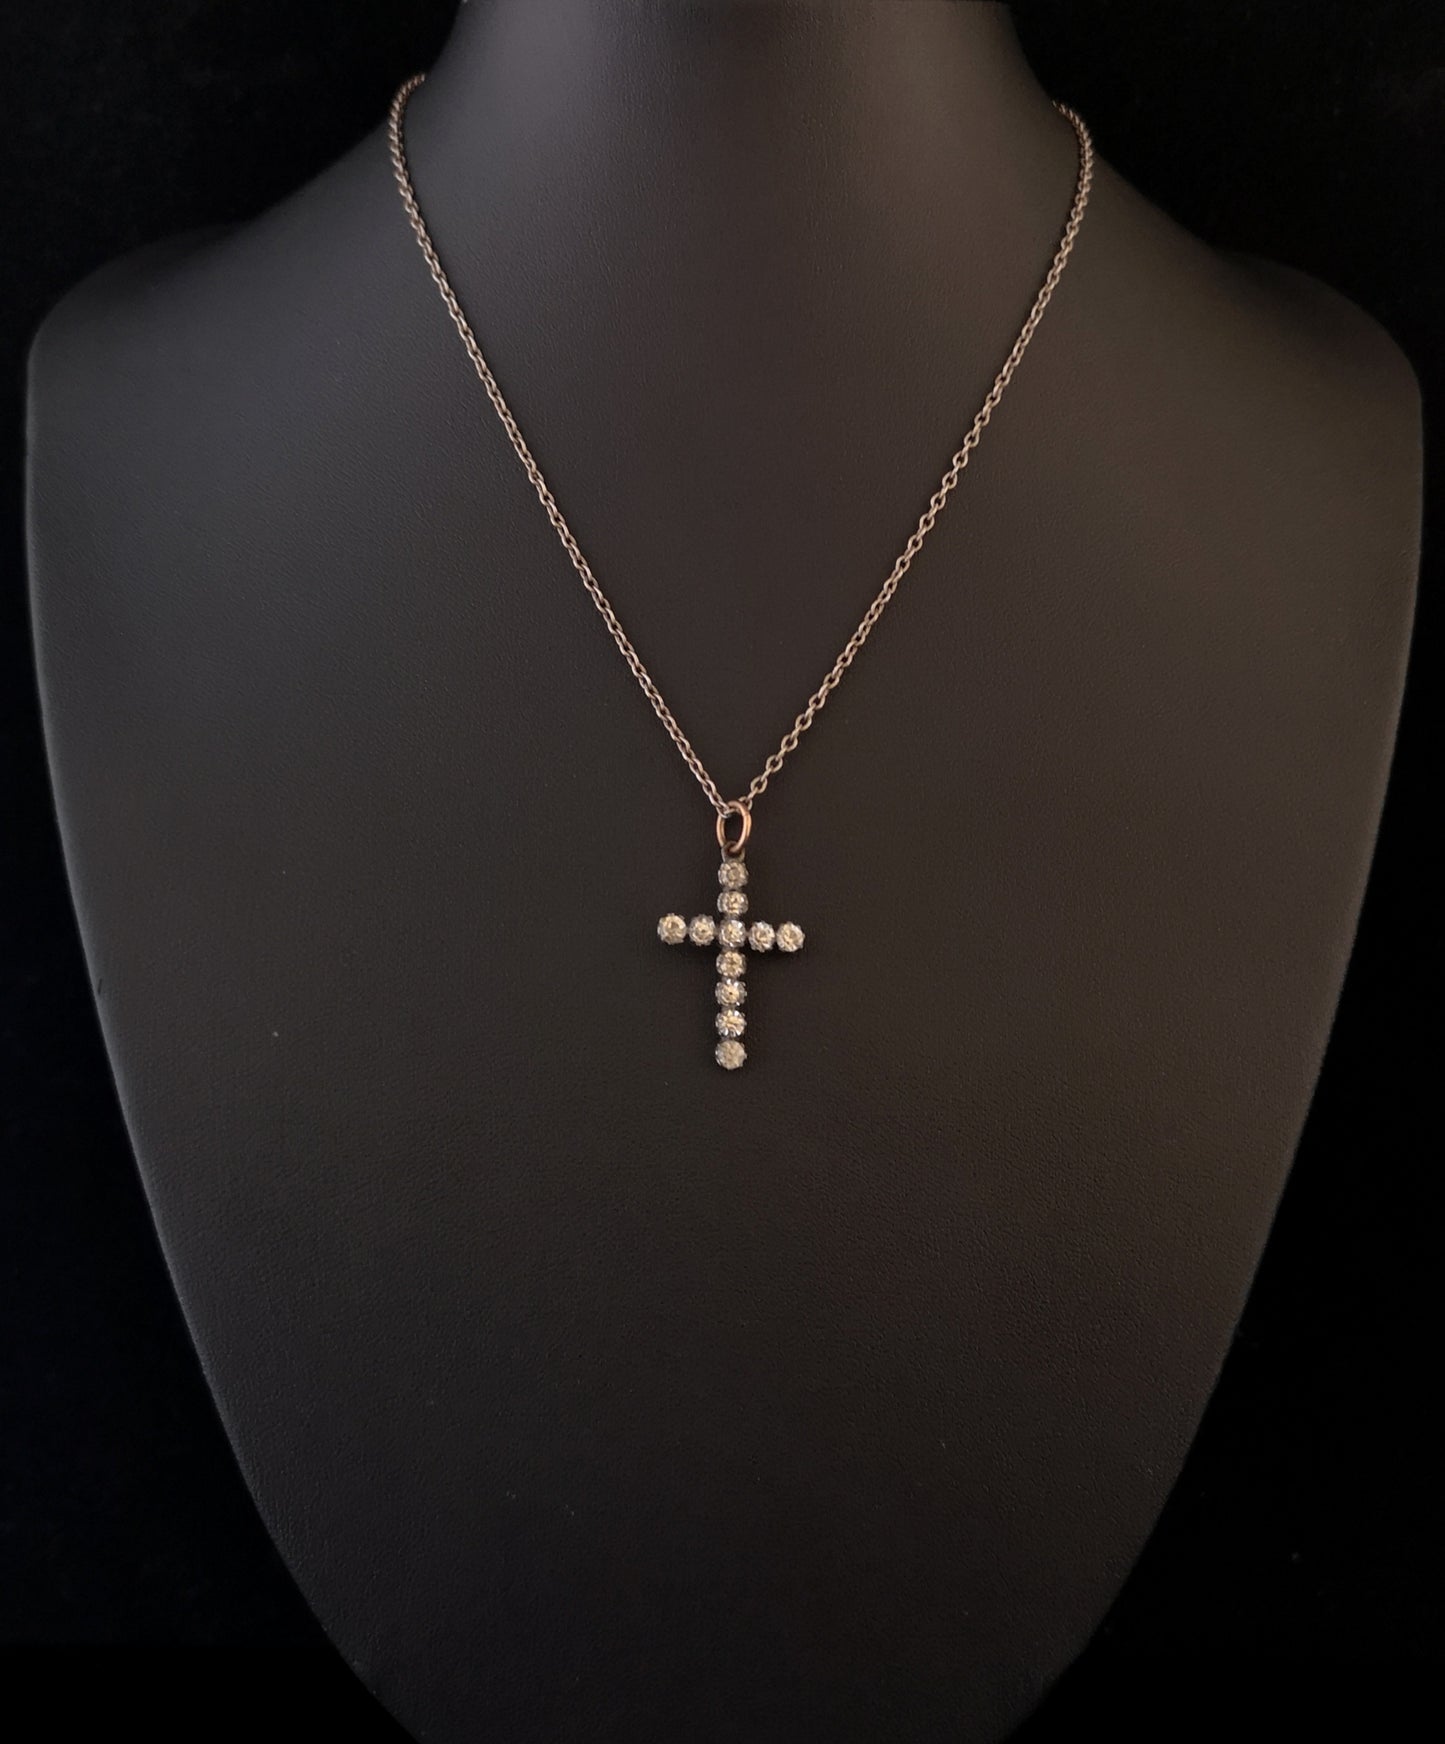 Antique Victorian silver paste cross pendant